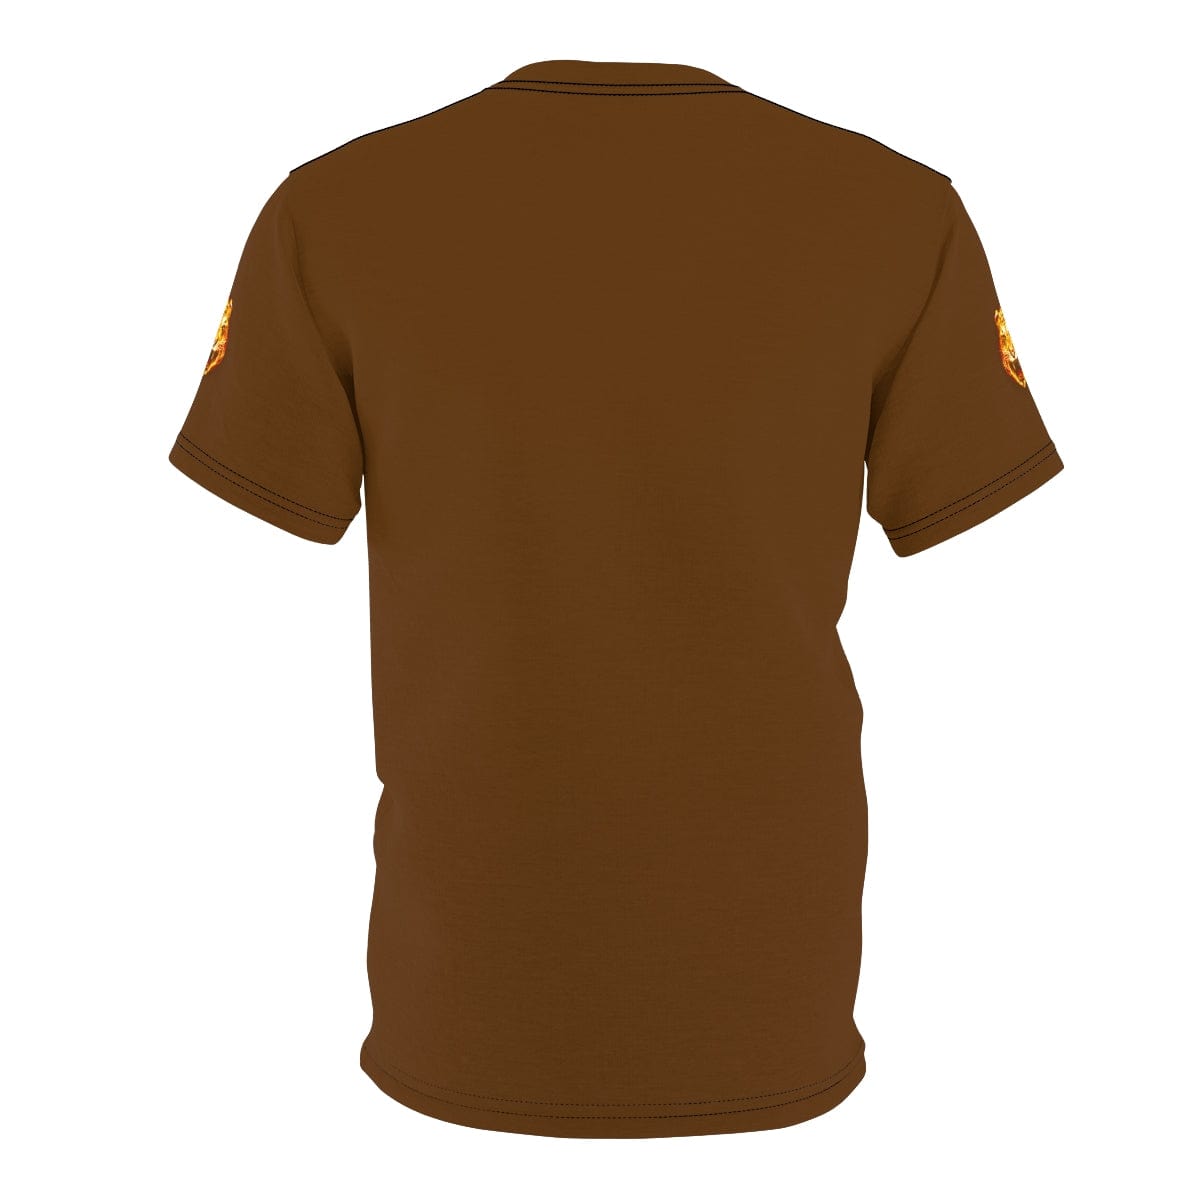 The All Premium Brown Tiger World Unisex Cut & Sew T-Shirt